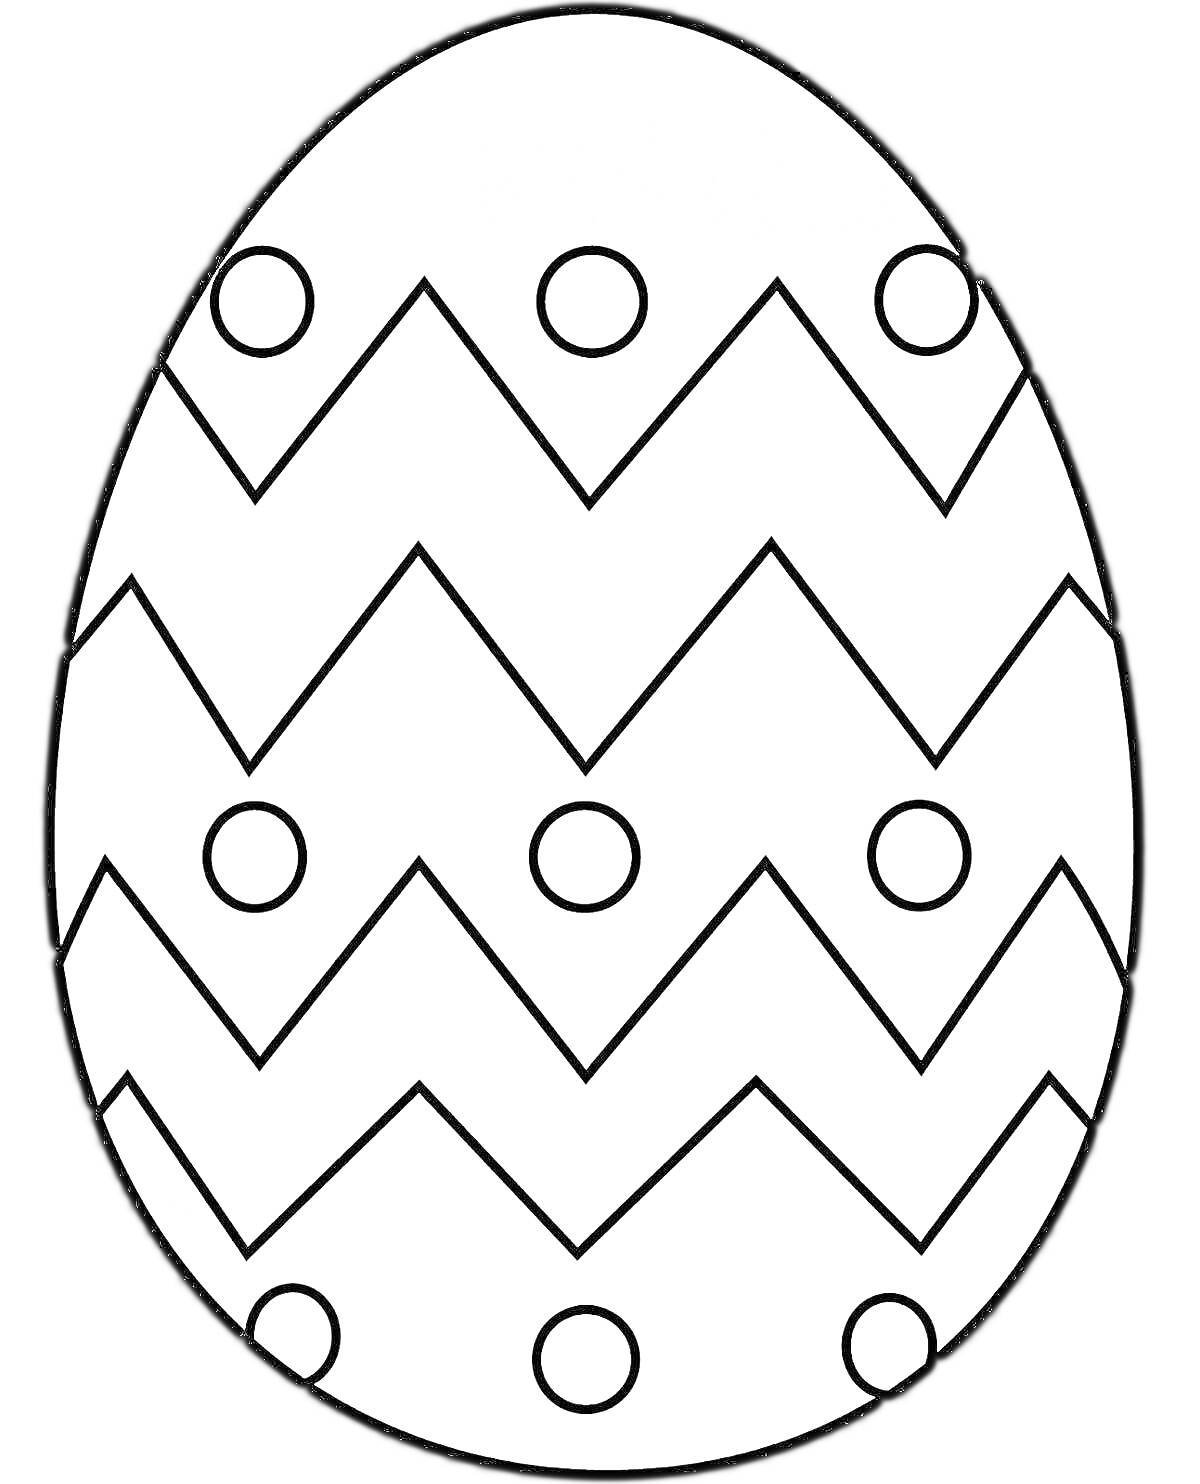 Раскраска яйцо с зигзагами и кружками для раскраски